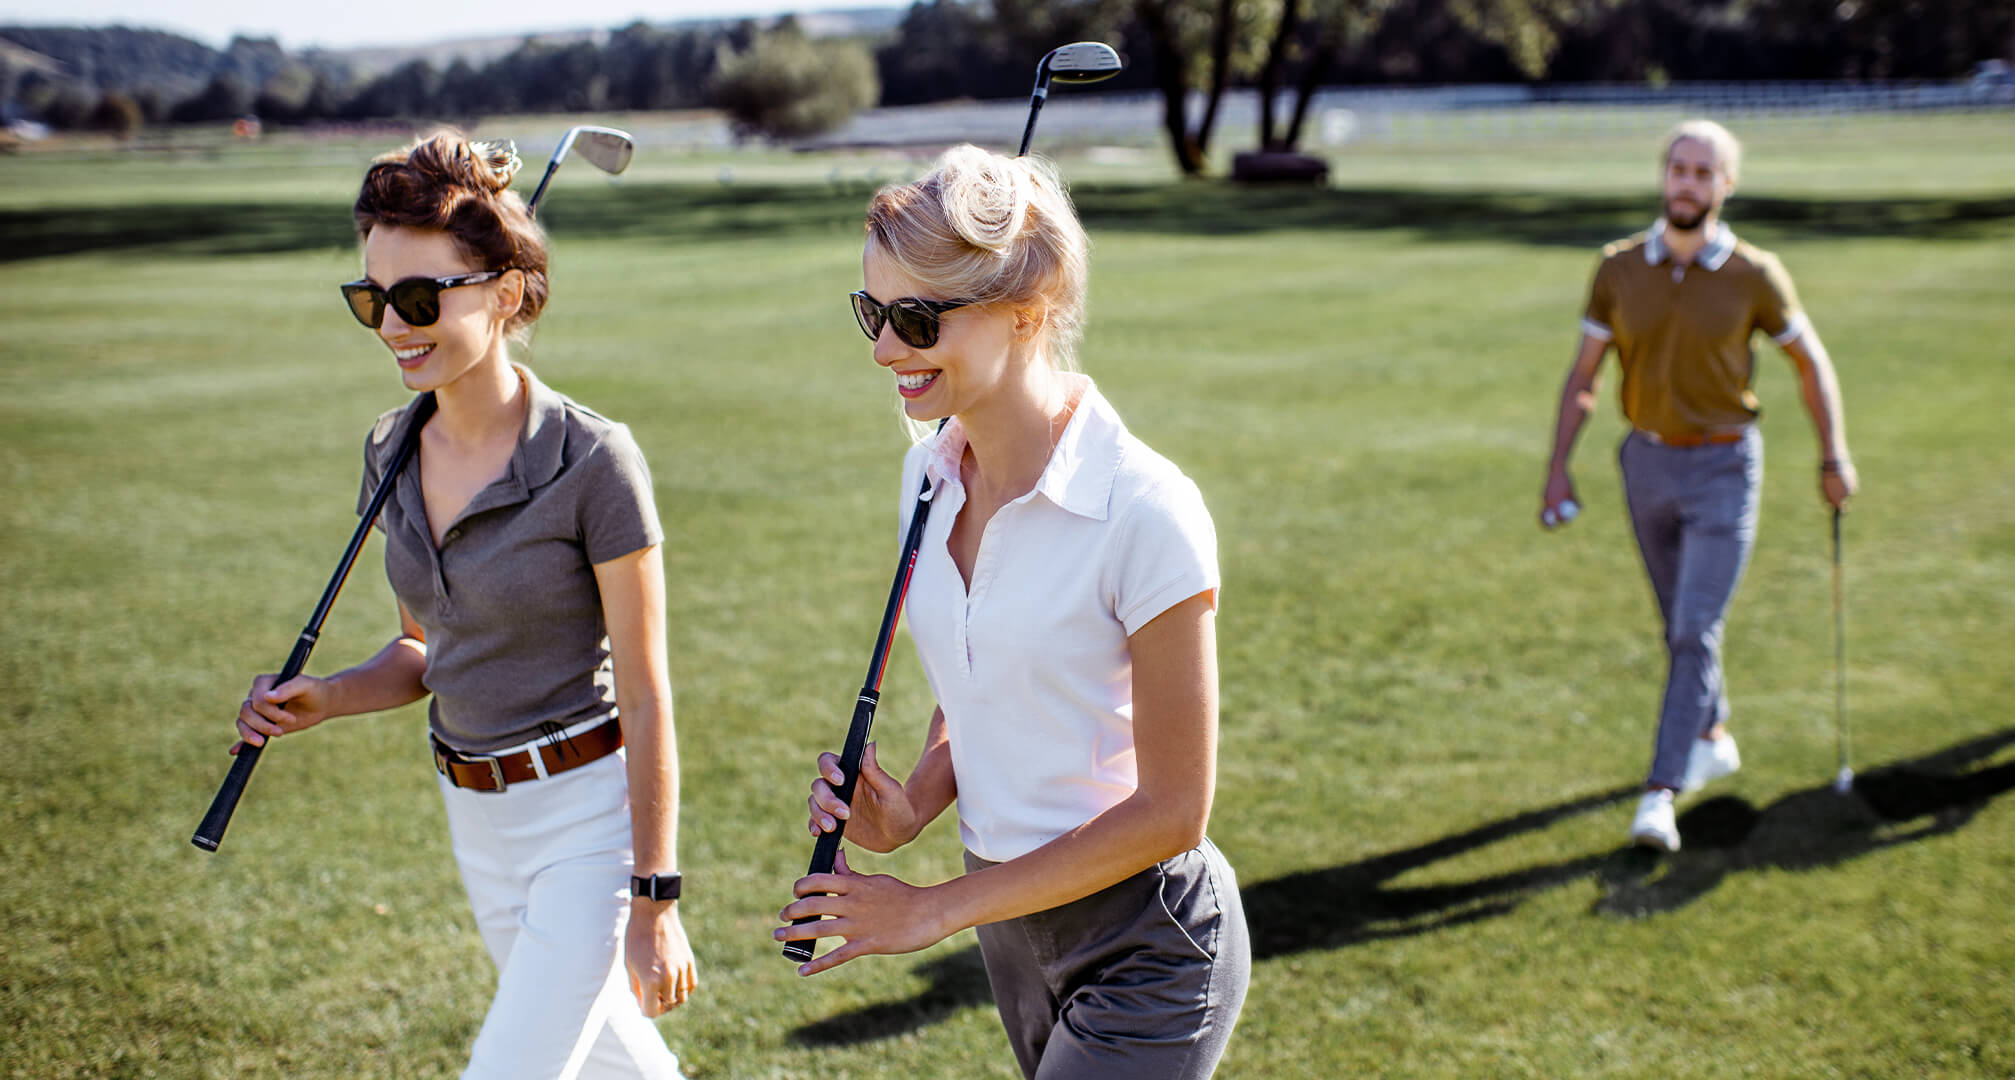 https://www.lentiamo.ie/images/upload/golf-sunglasses-women.jpeg